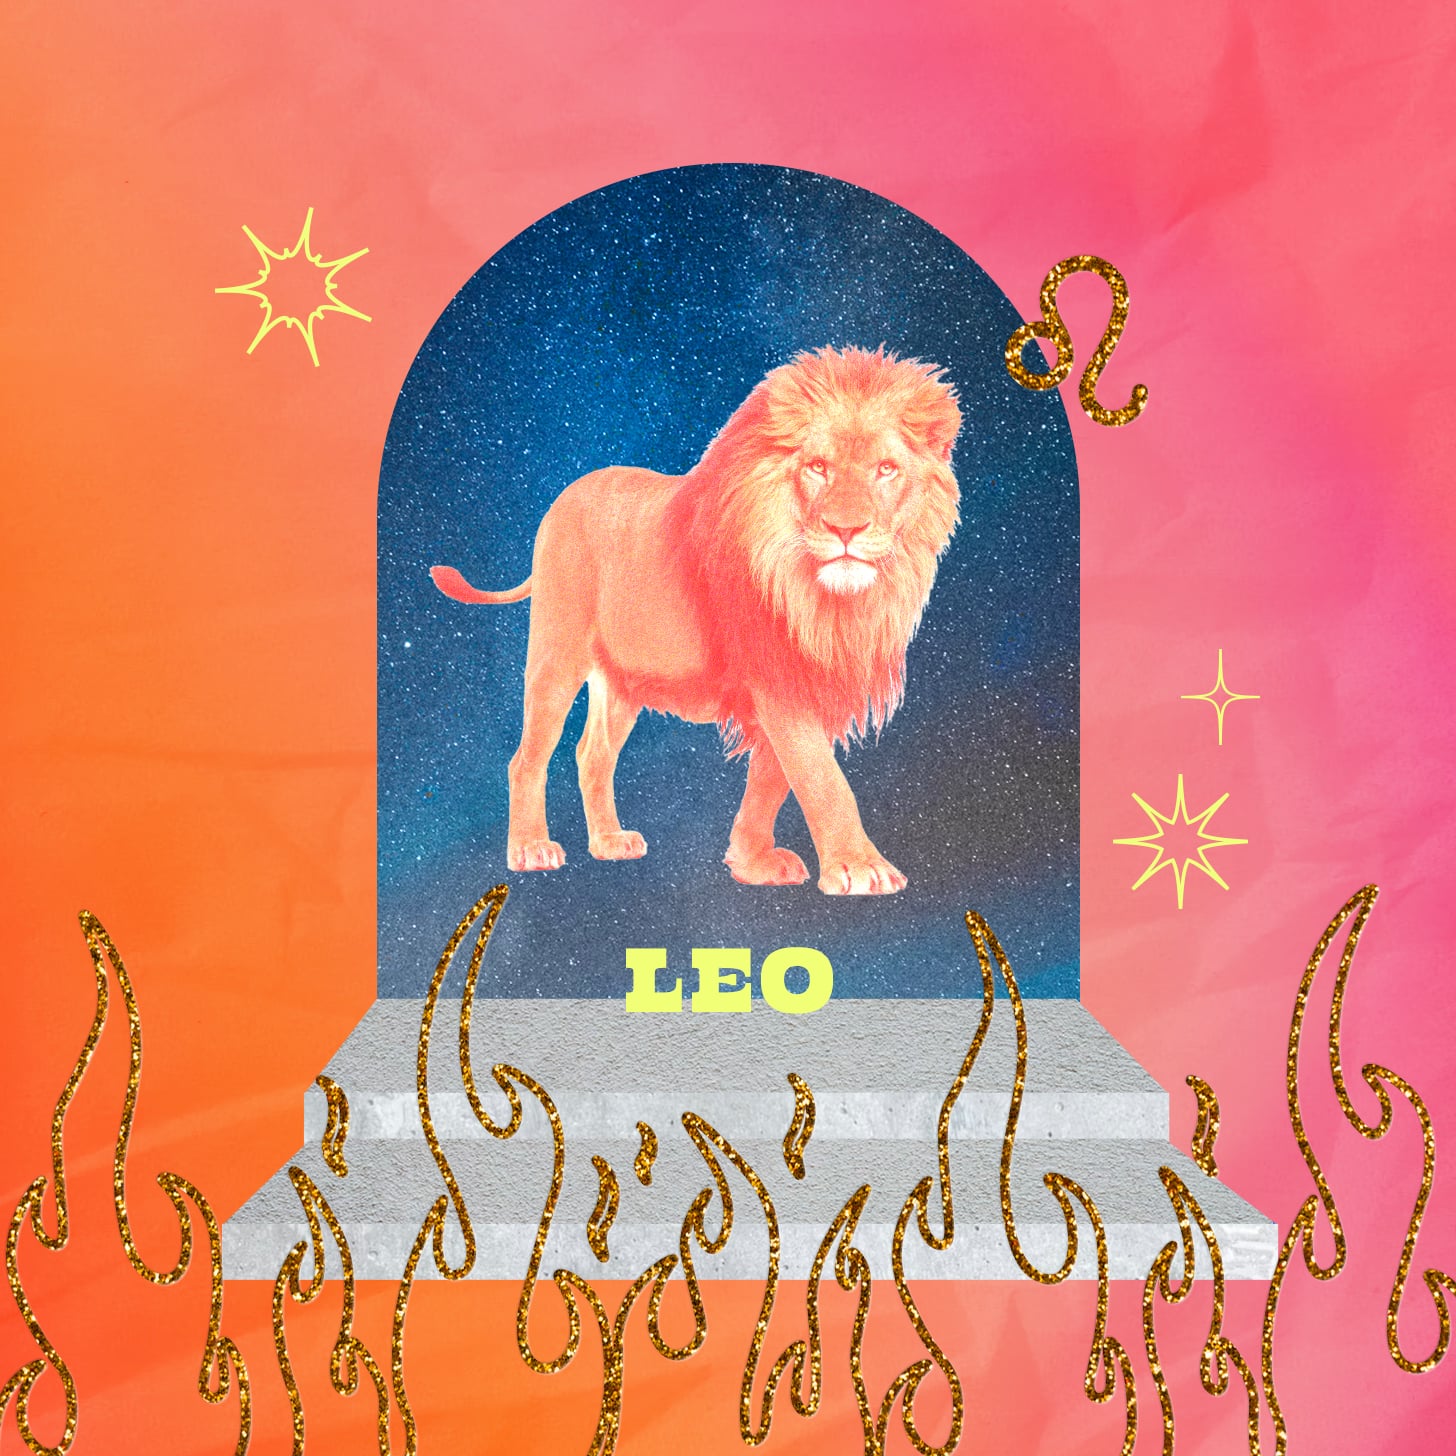 Leo weekly horoscope for July 10, 2022